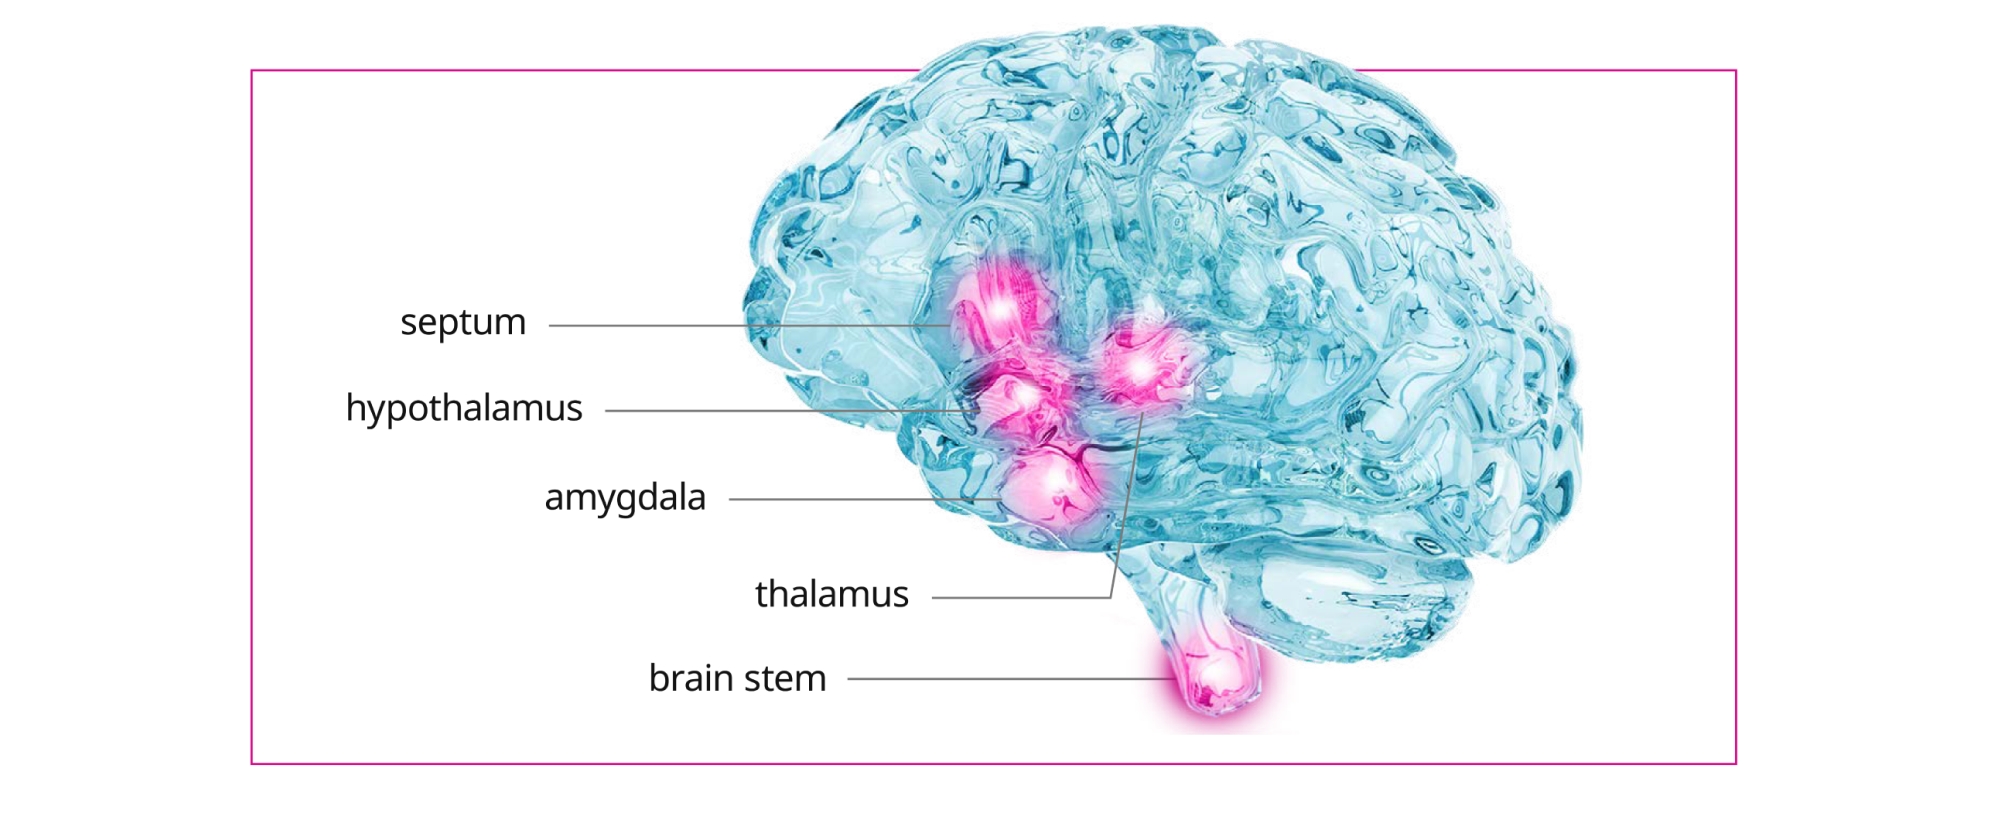 Wegovy® affects regions of the brain